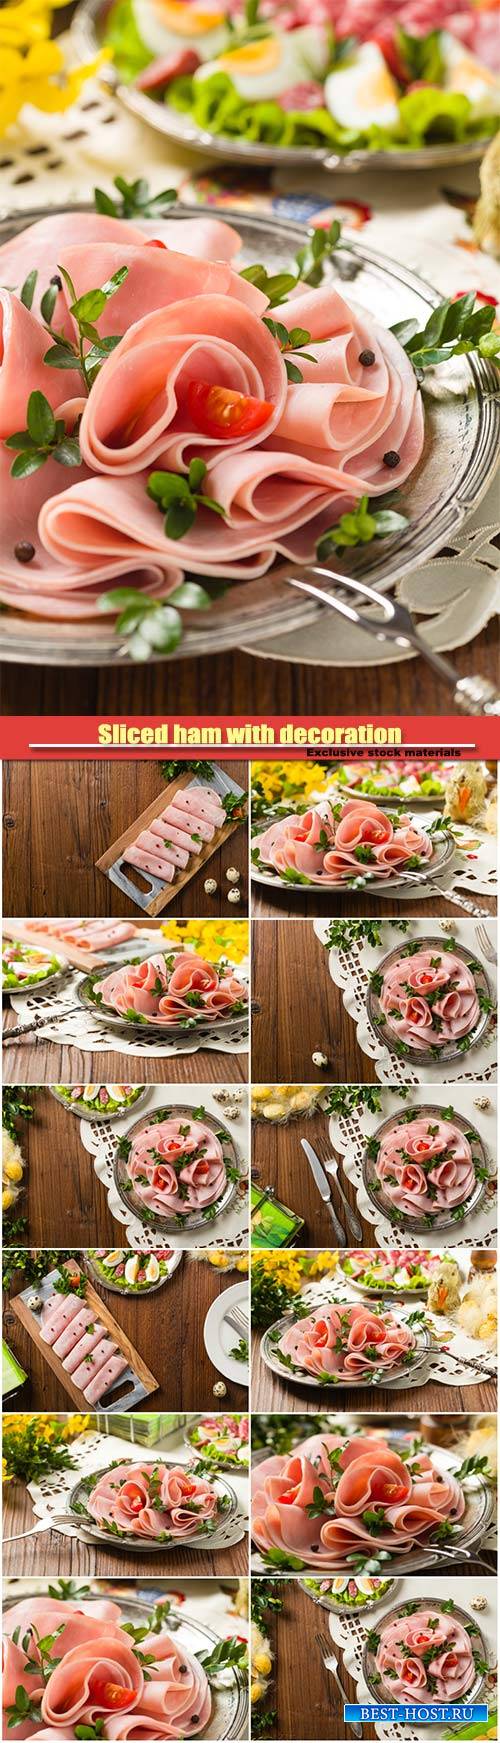 Sliced ham with decoration